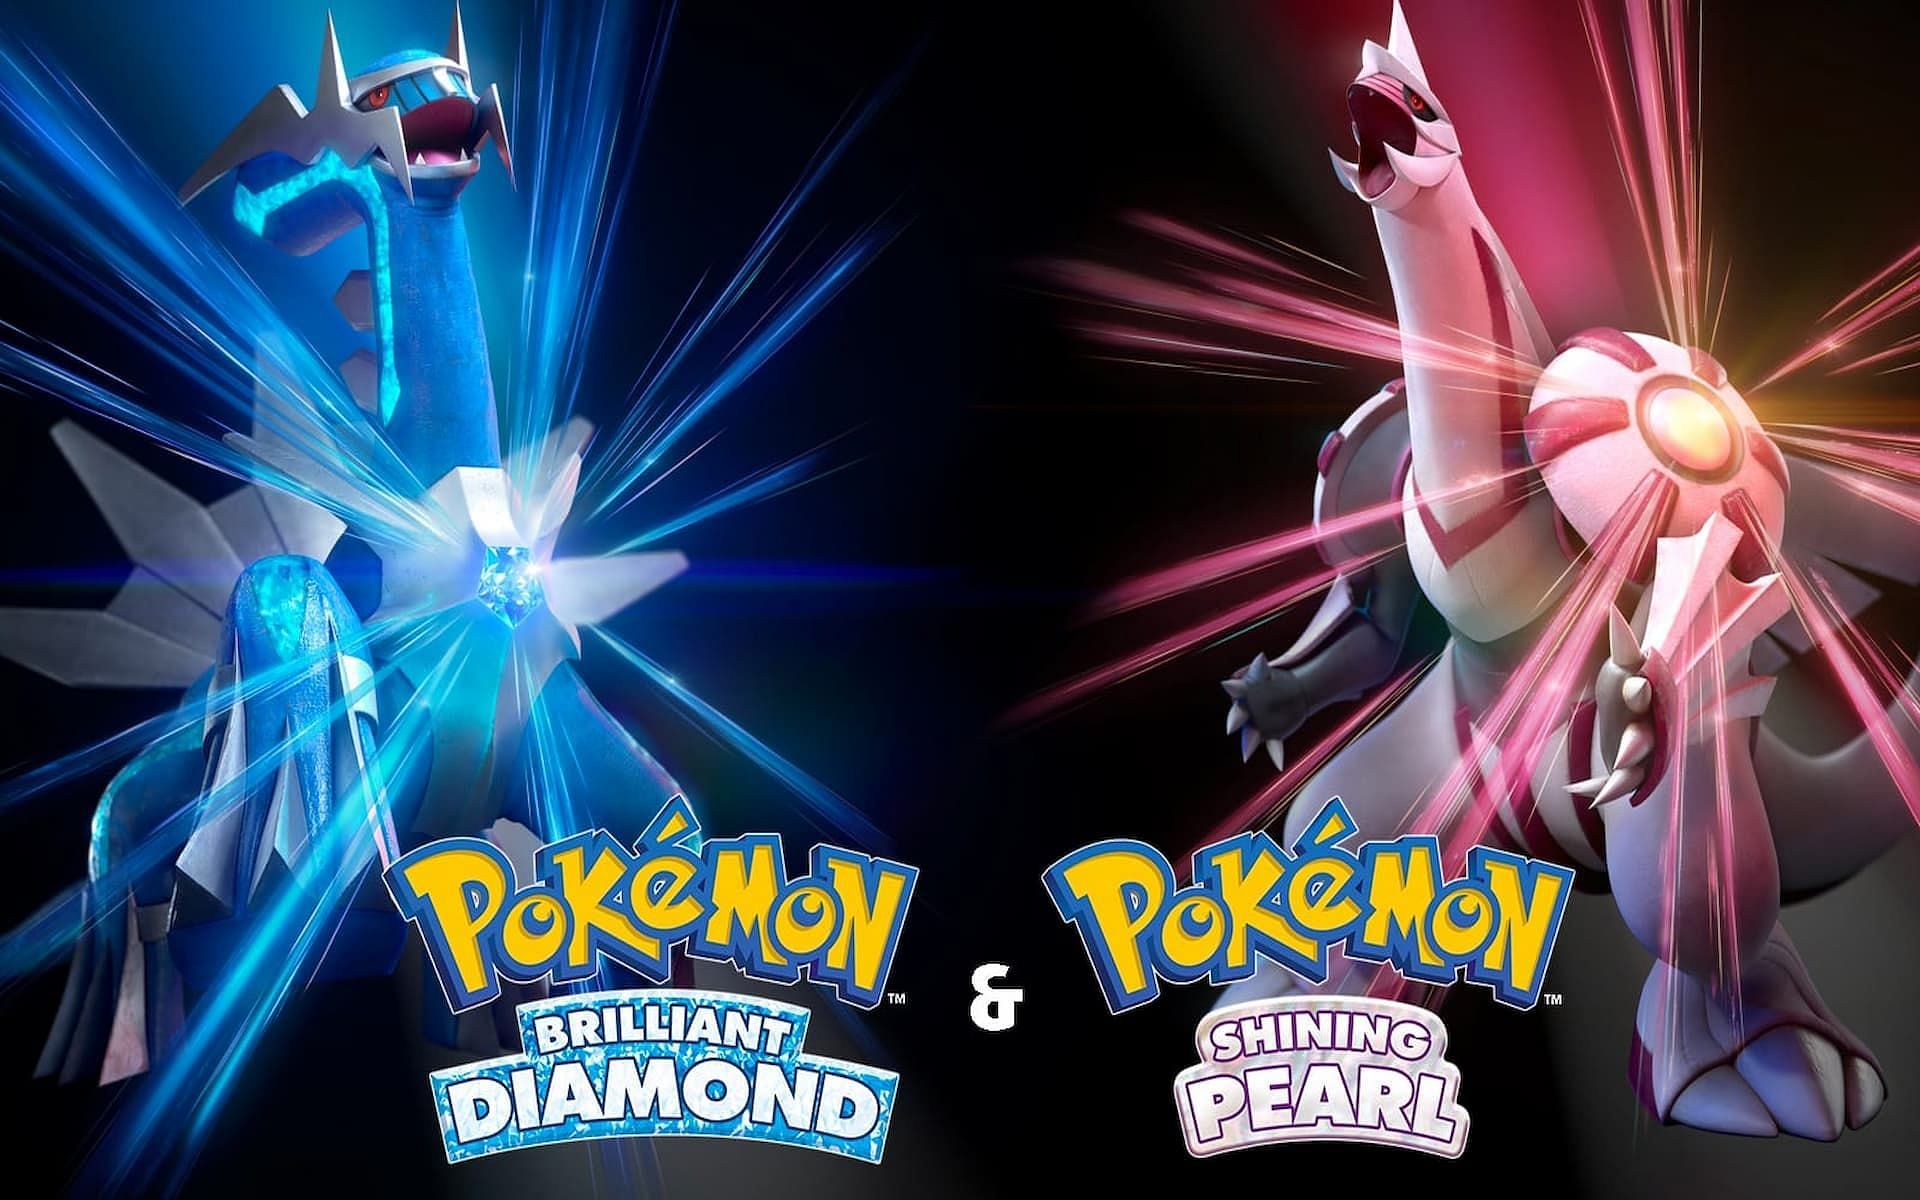 Shiny Legendary Regigigas / Pokémon Brilliant Diamond and